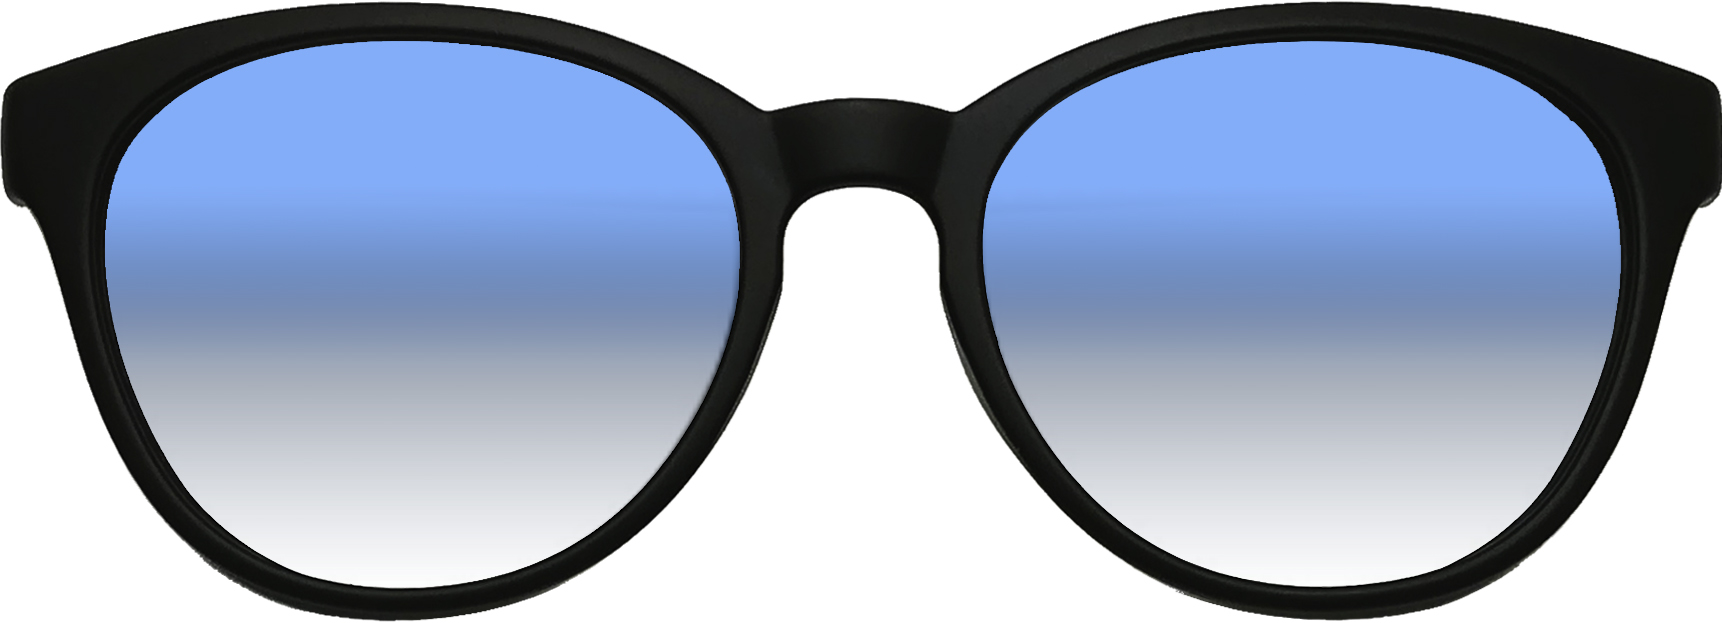 CocleSpec Glasses